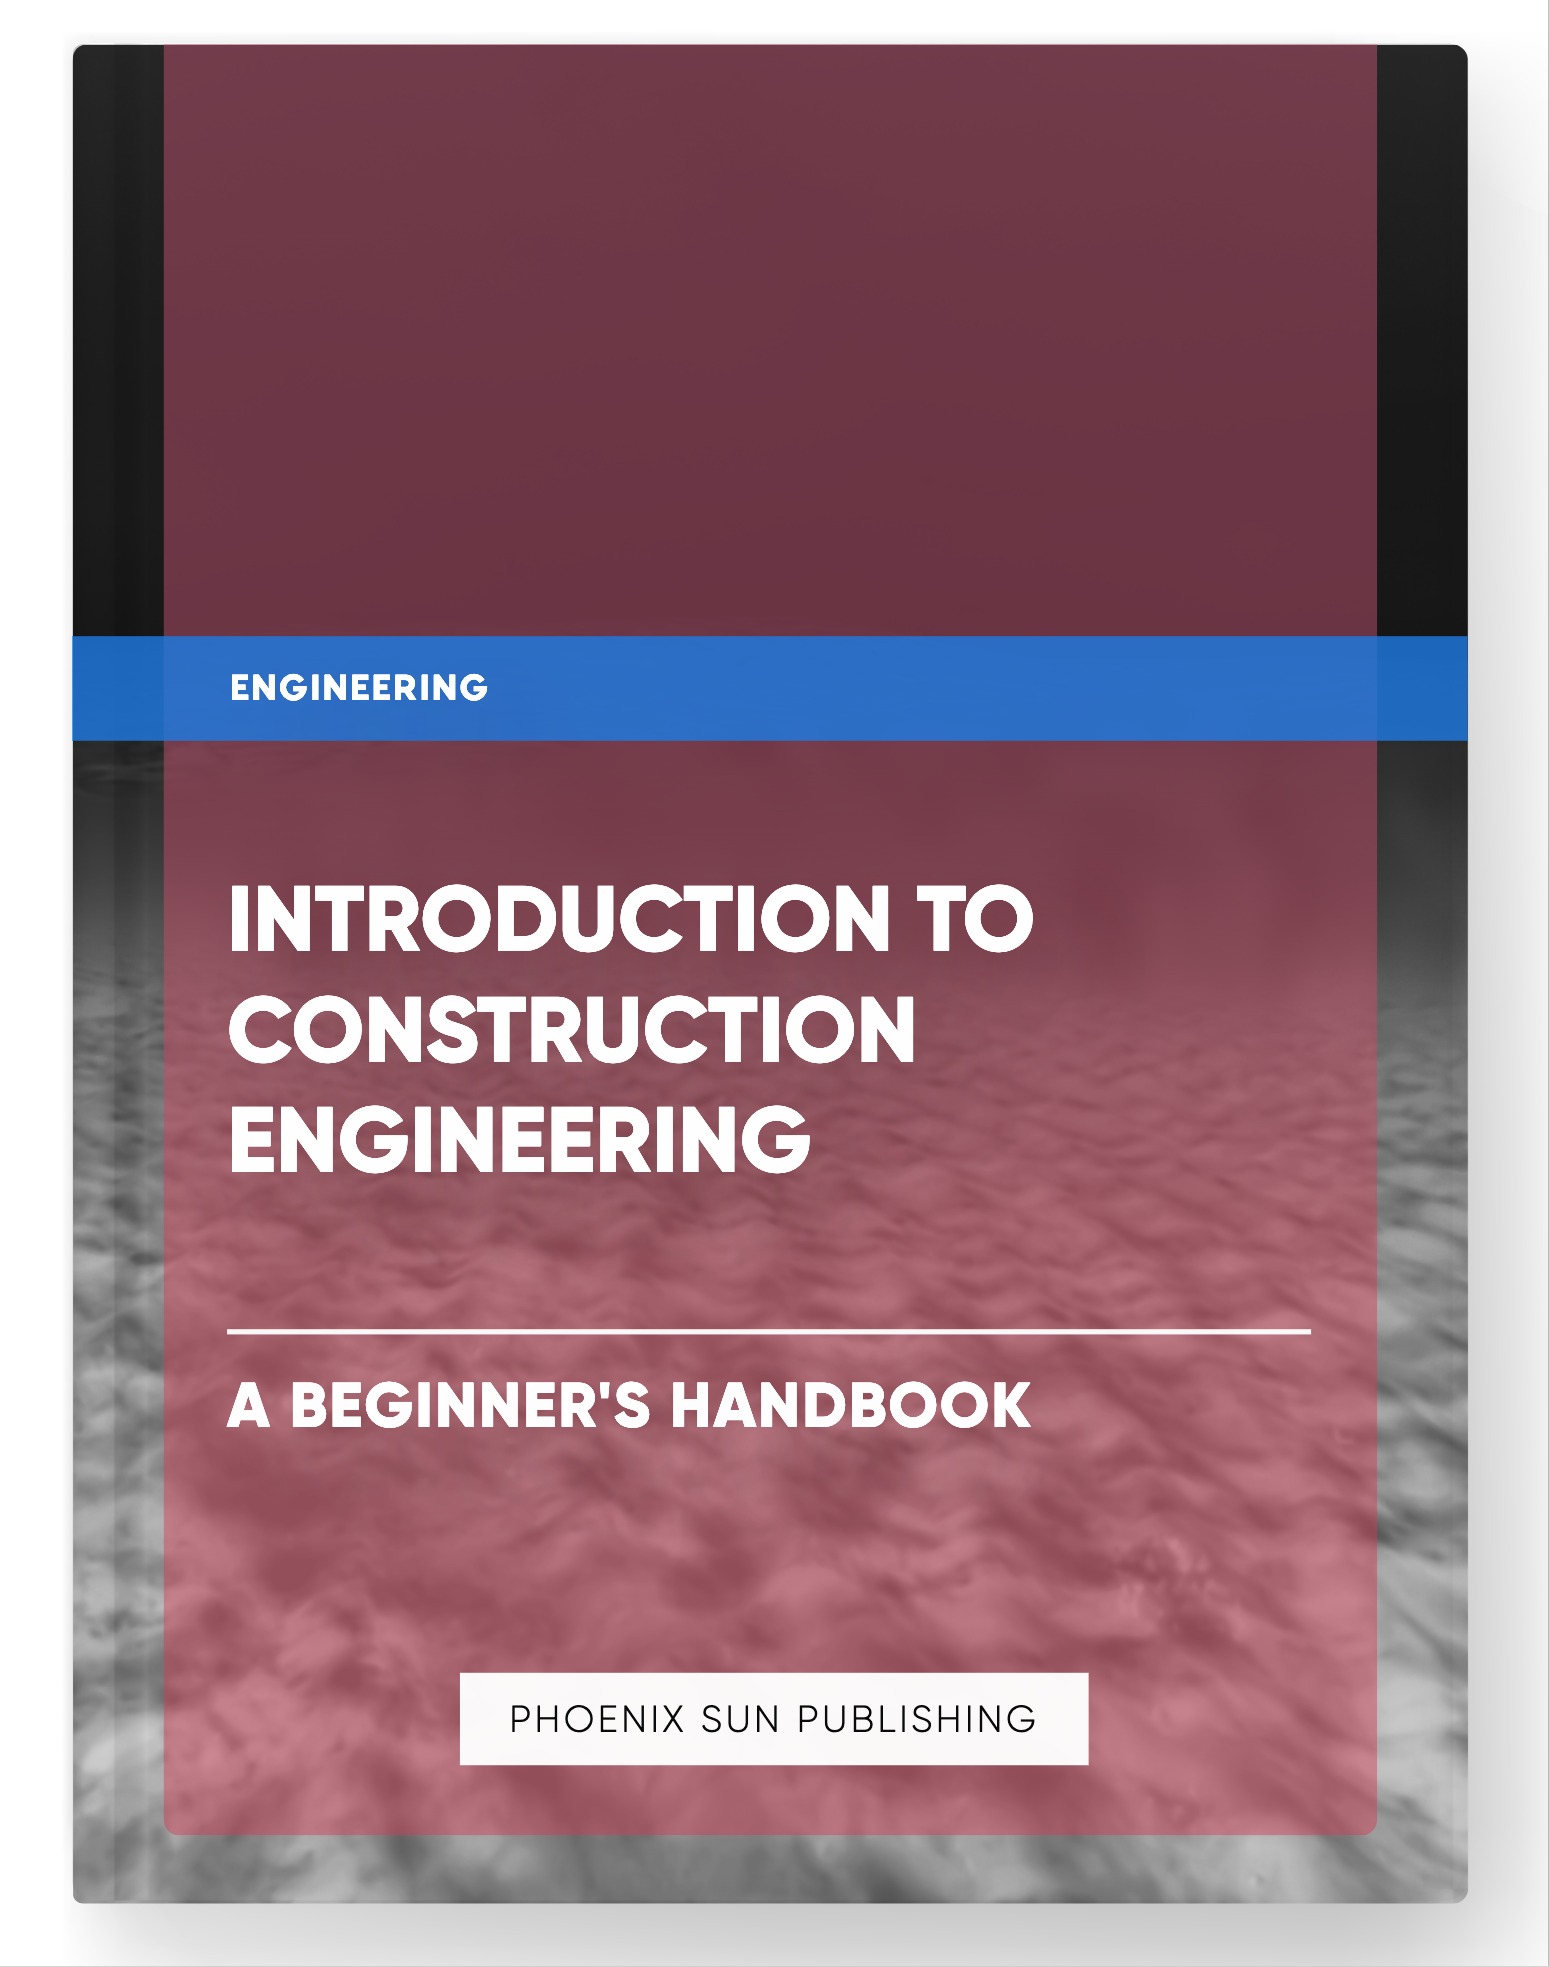 Introduction to Construction Engineering – A Beginner’s Handbook